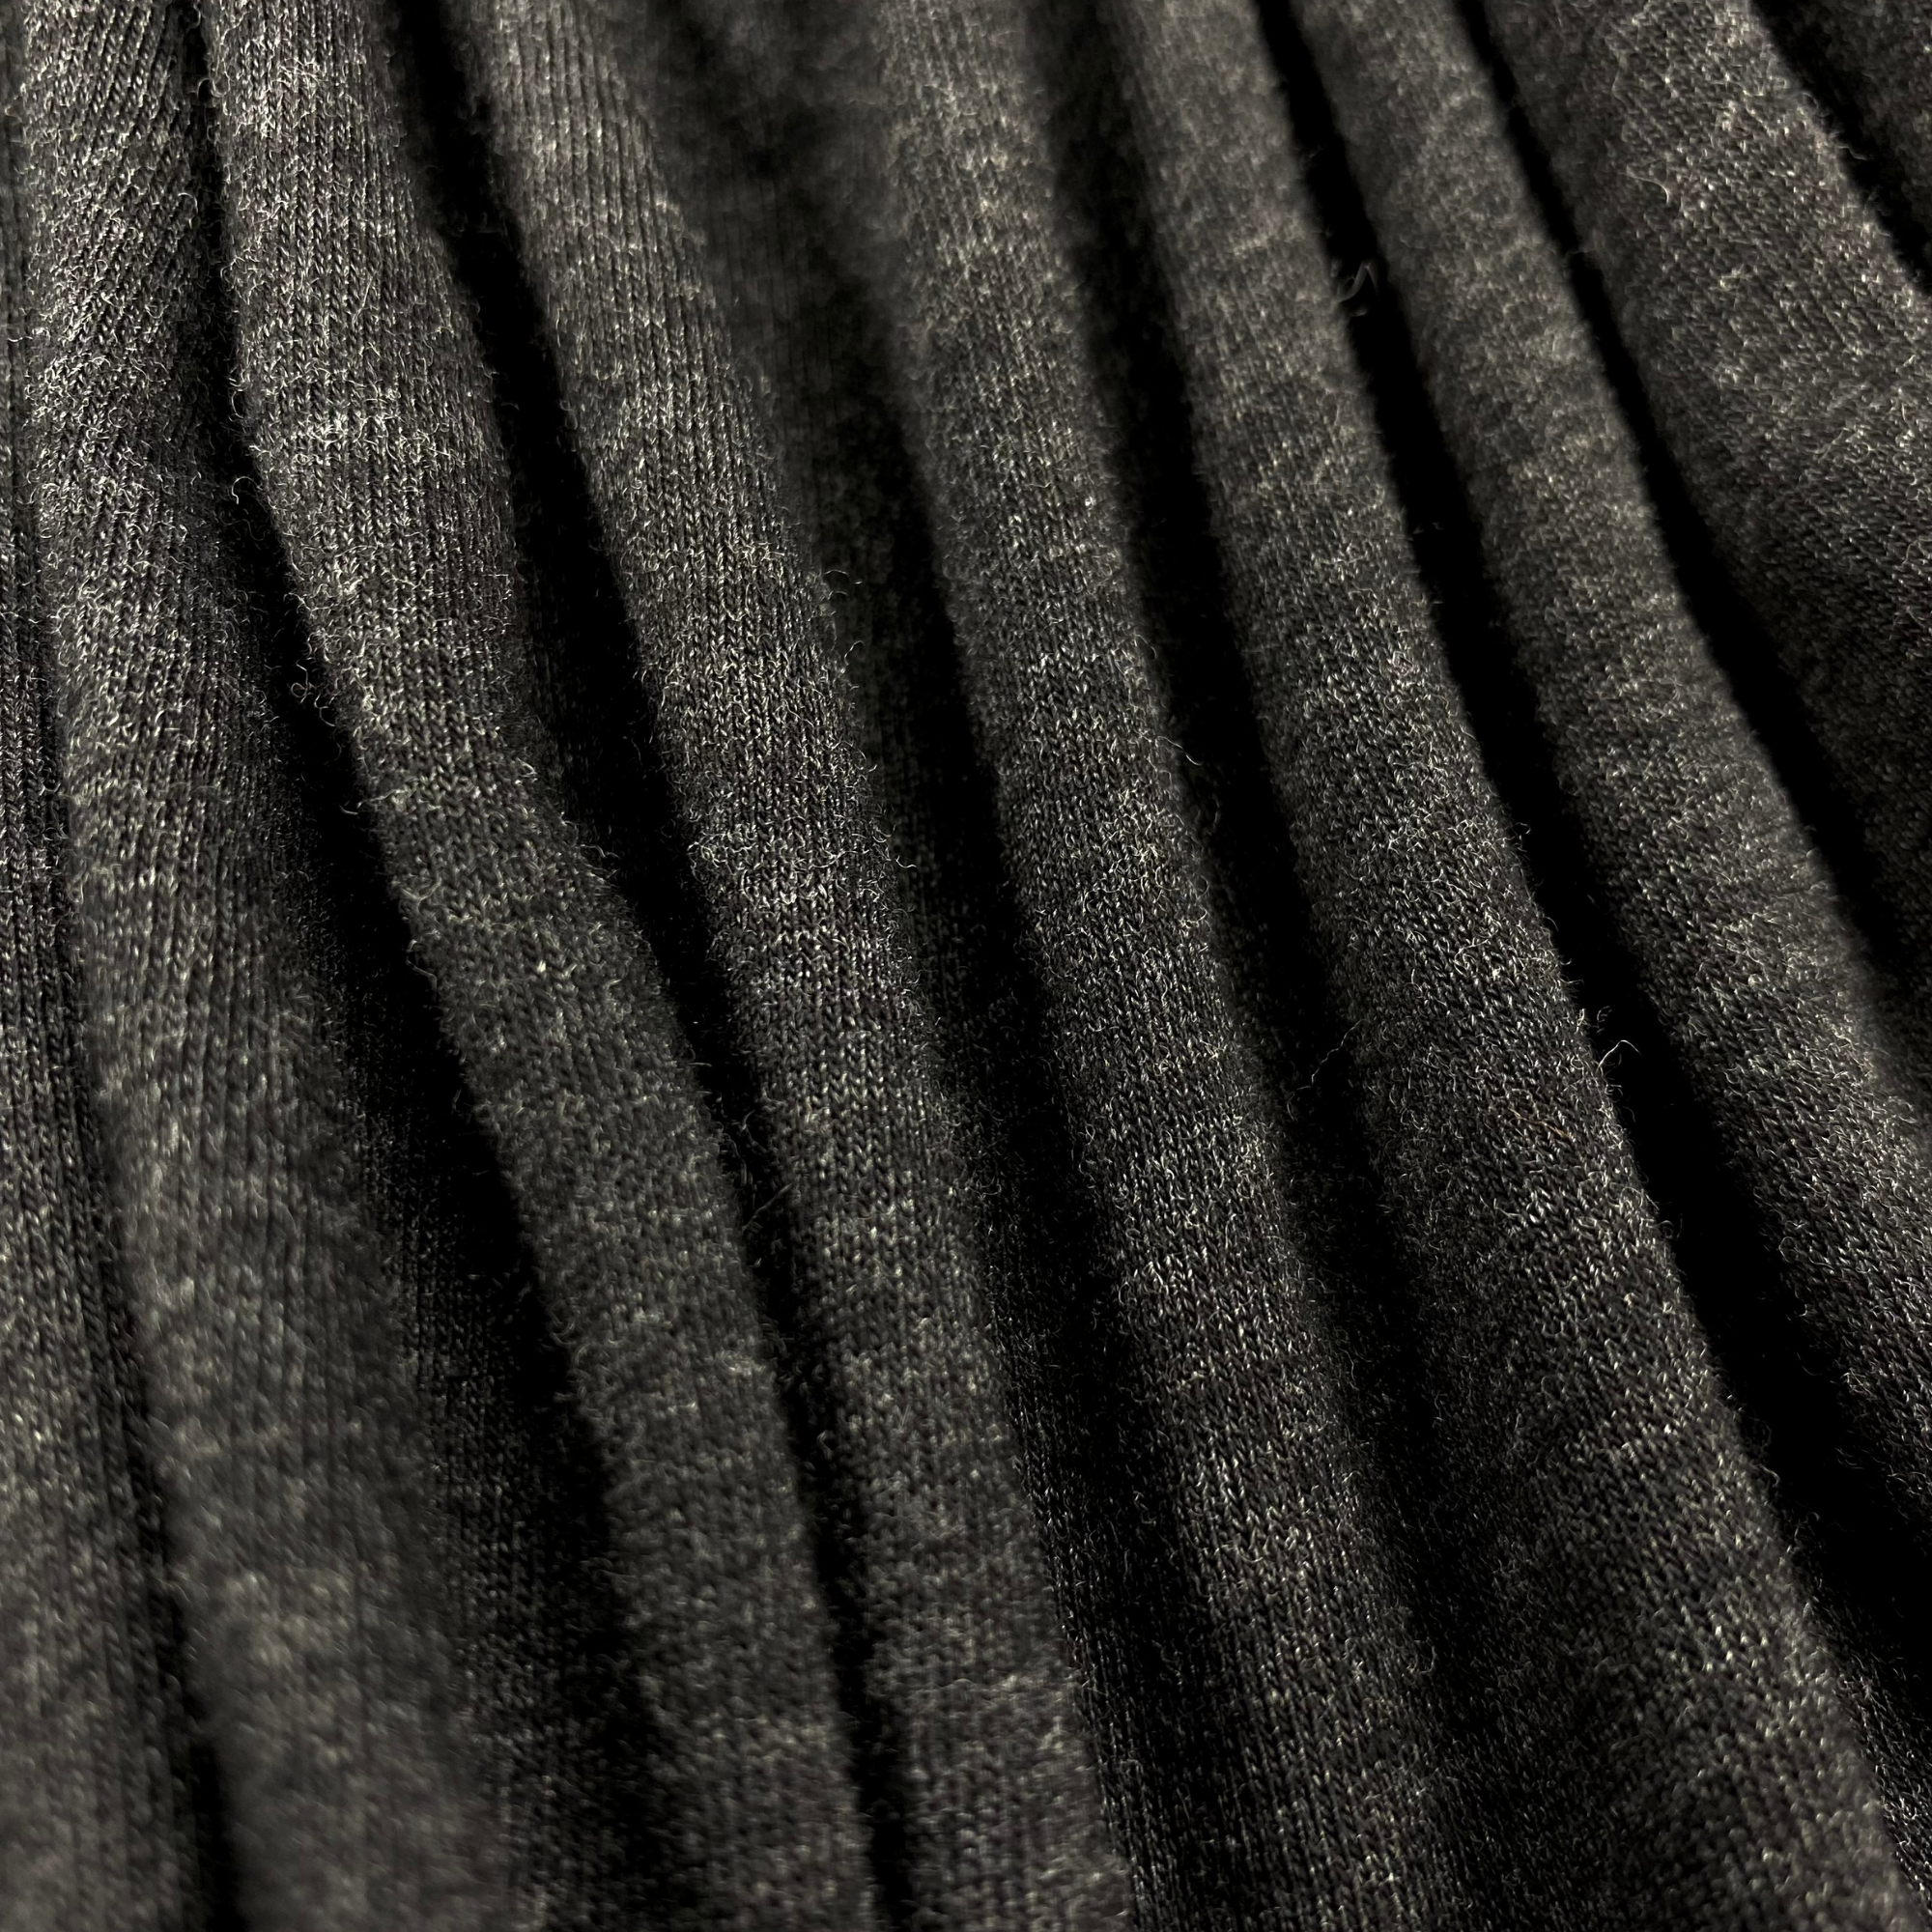 Happy Thotumn Fall Embroidered Black Tee Shirt, Unisex